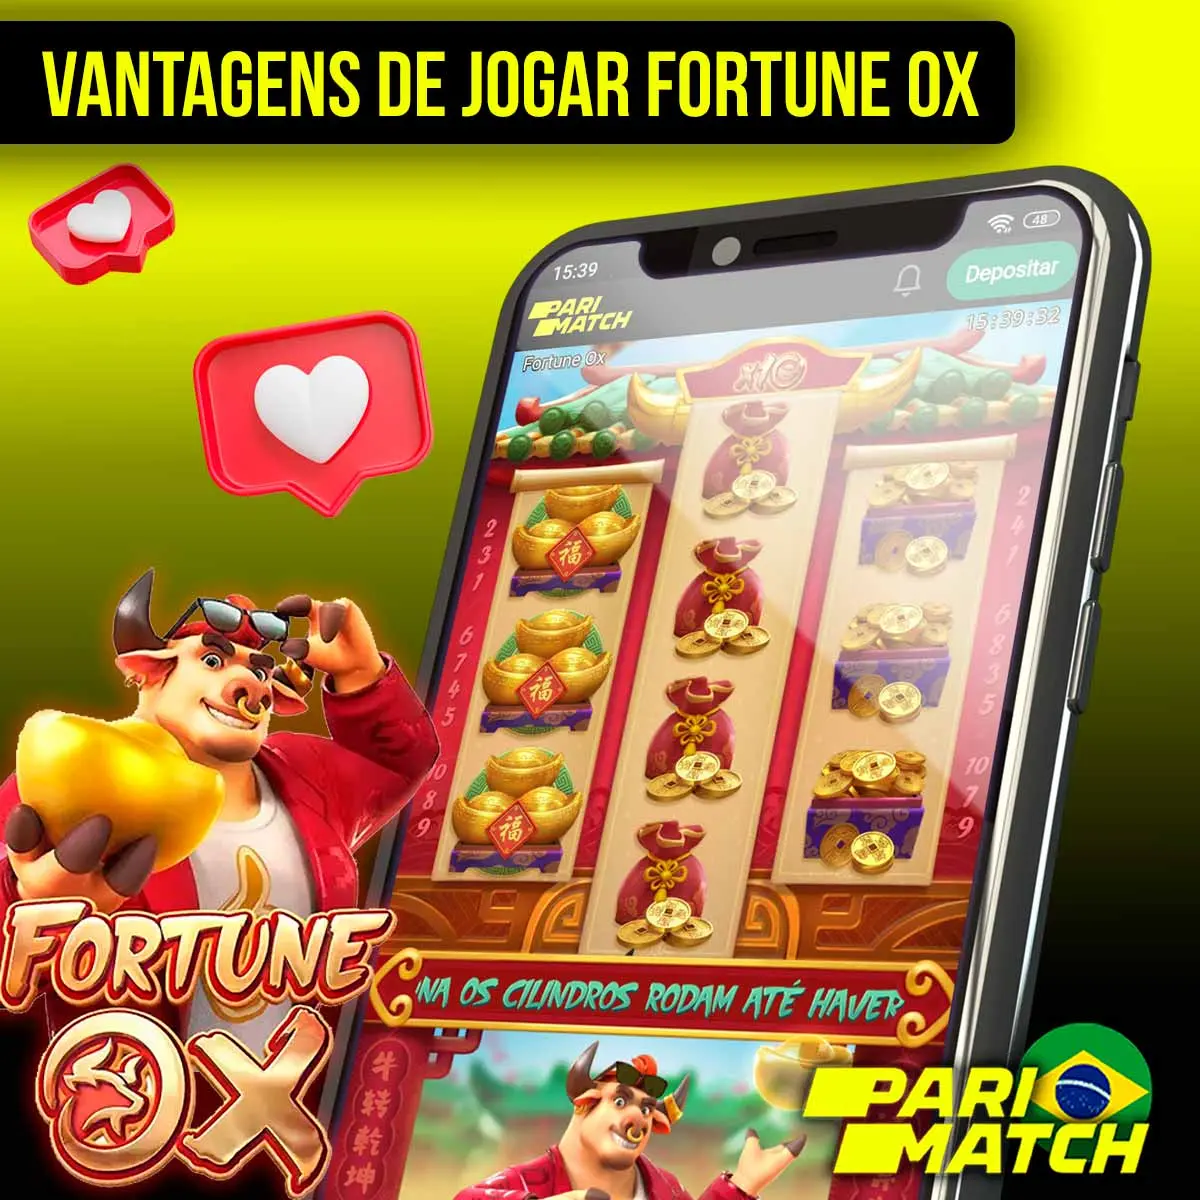 Vantagens de jogar na plataforma Parimatch Fortune OX